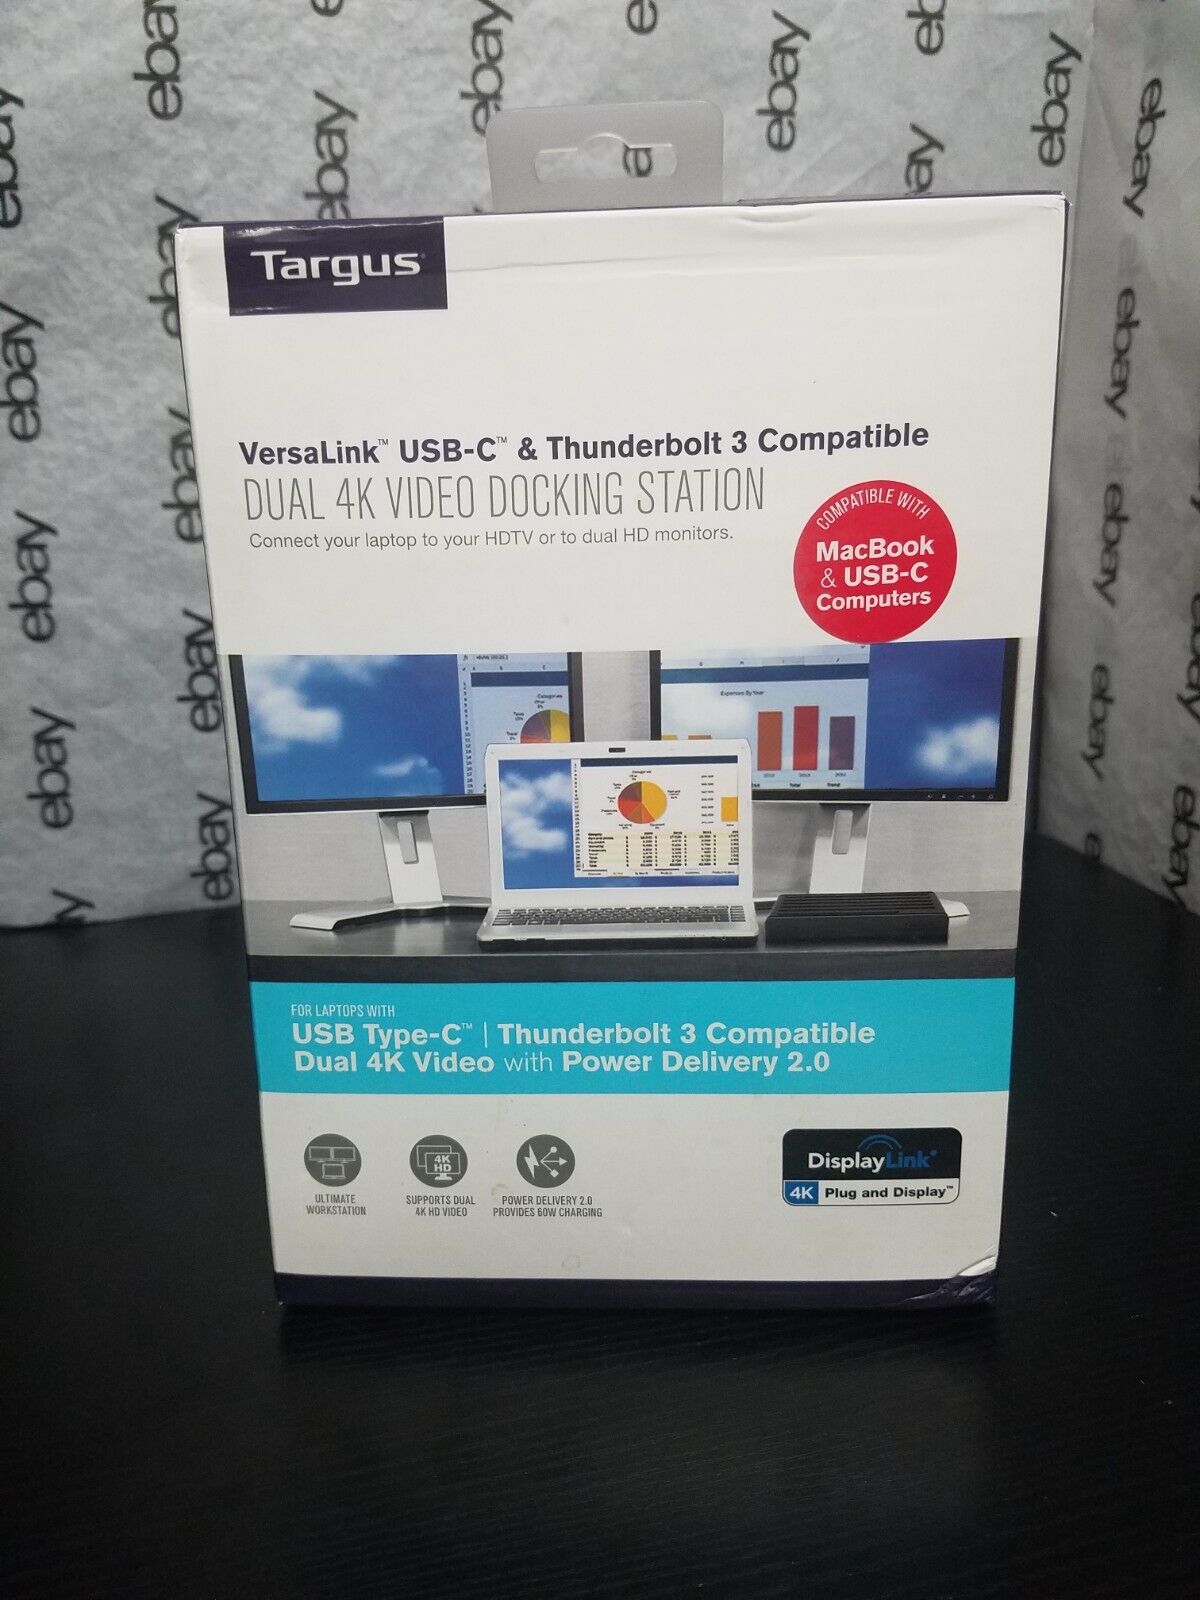 Targus VersaLink USB-C and Thunderbolt 3 Dual 4K Video Dock (DSU400US)*OPEN BOX*